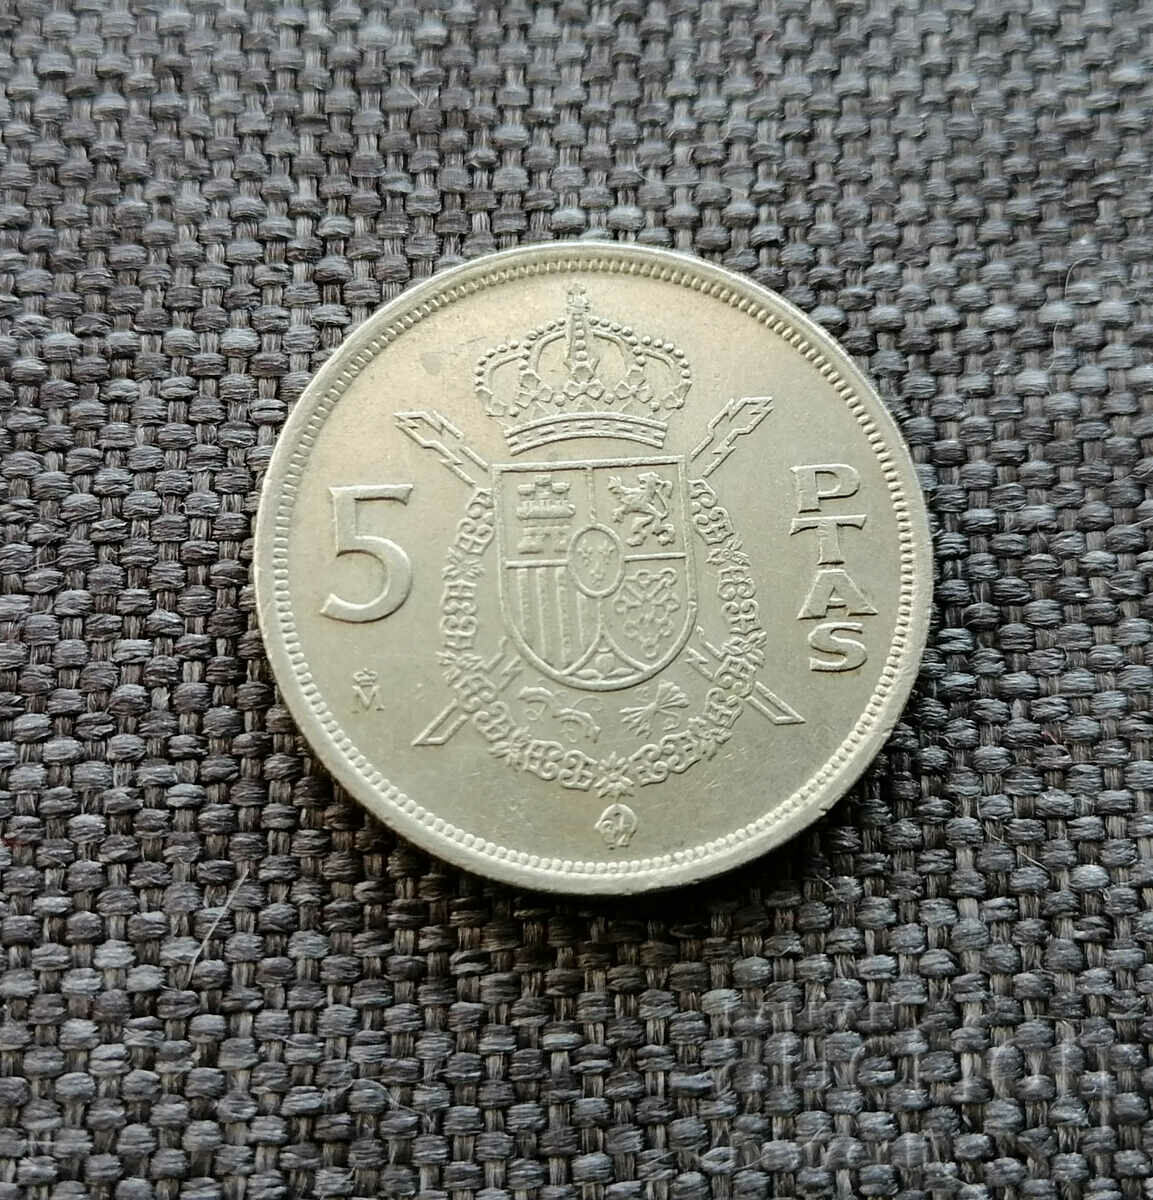 ❤️ ⭐ Spain 1982 5 pesetas ⭐ ❤️